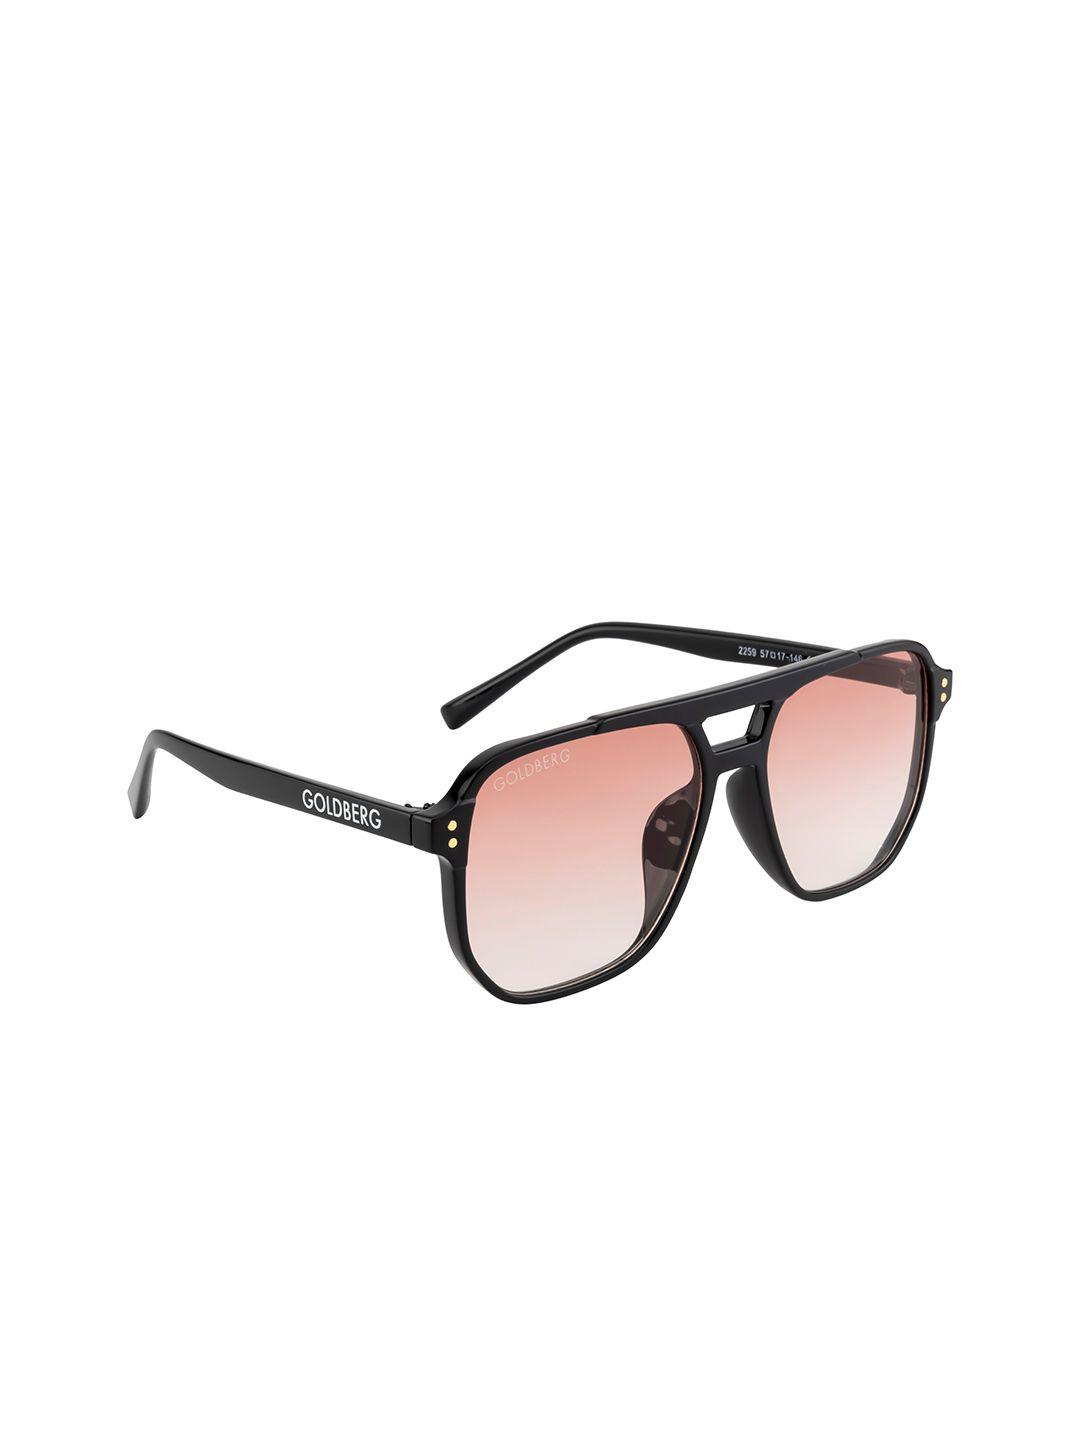 gold berg unisex pink lens & black aviator sunglasses with uv protected lens